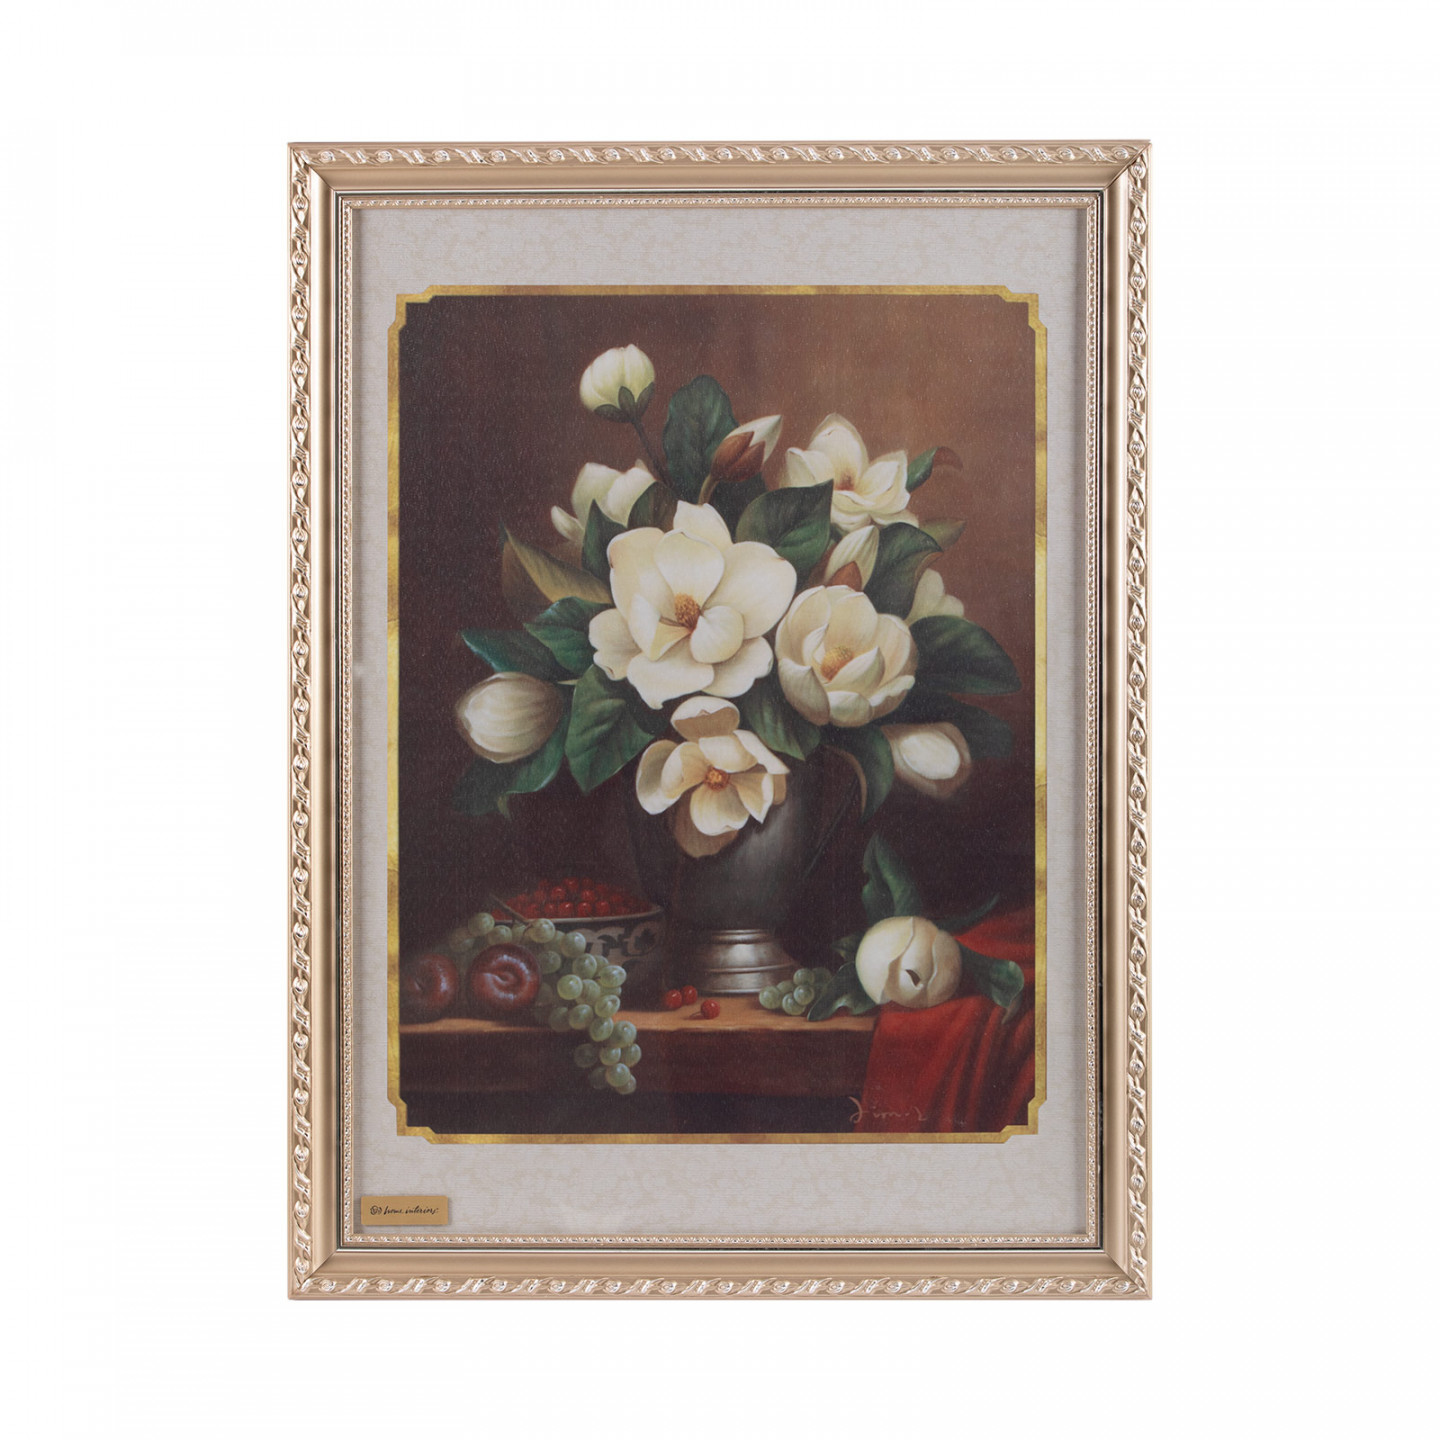 - Cuadro "Bouquet de Magnolias" - Home Interiors de Mexico